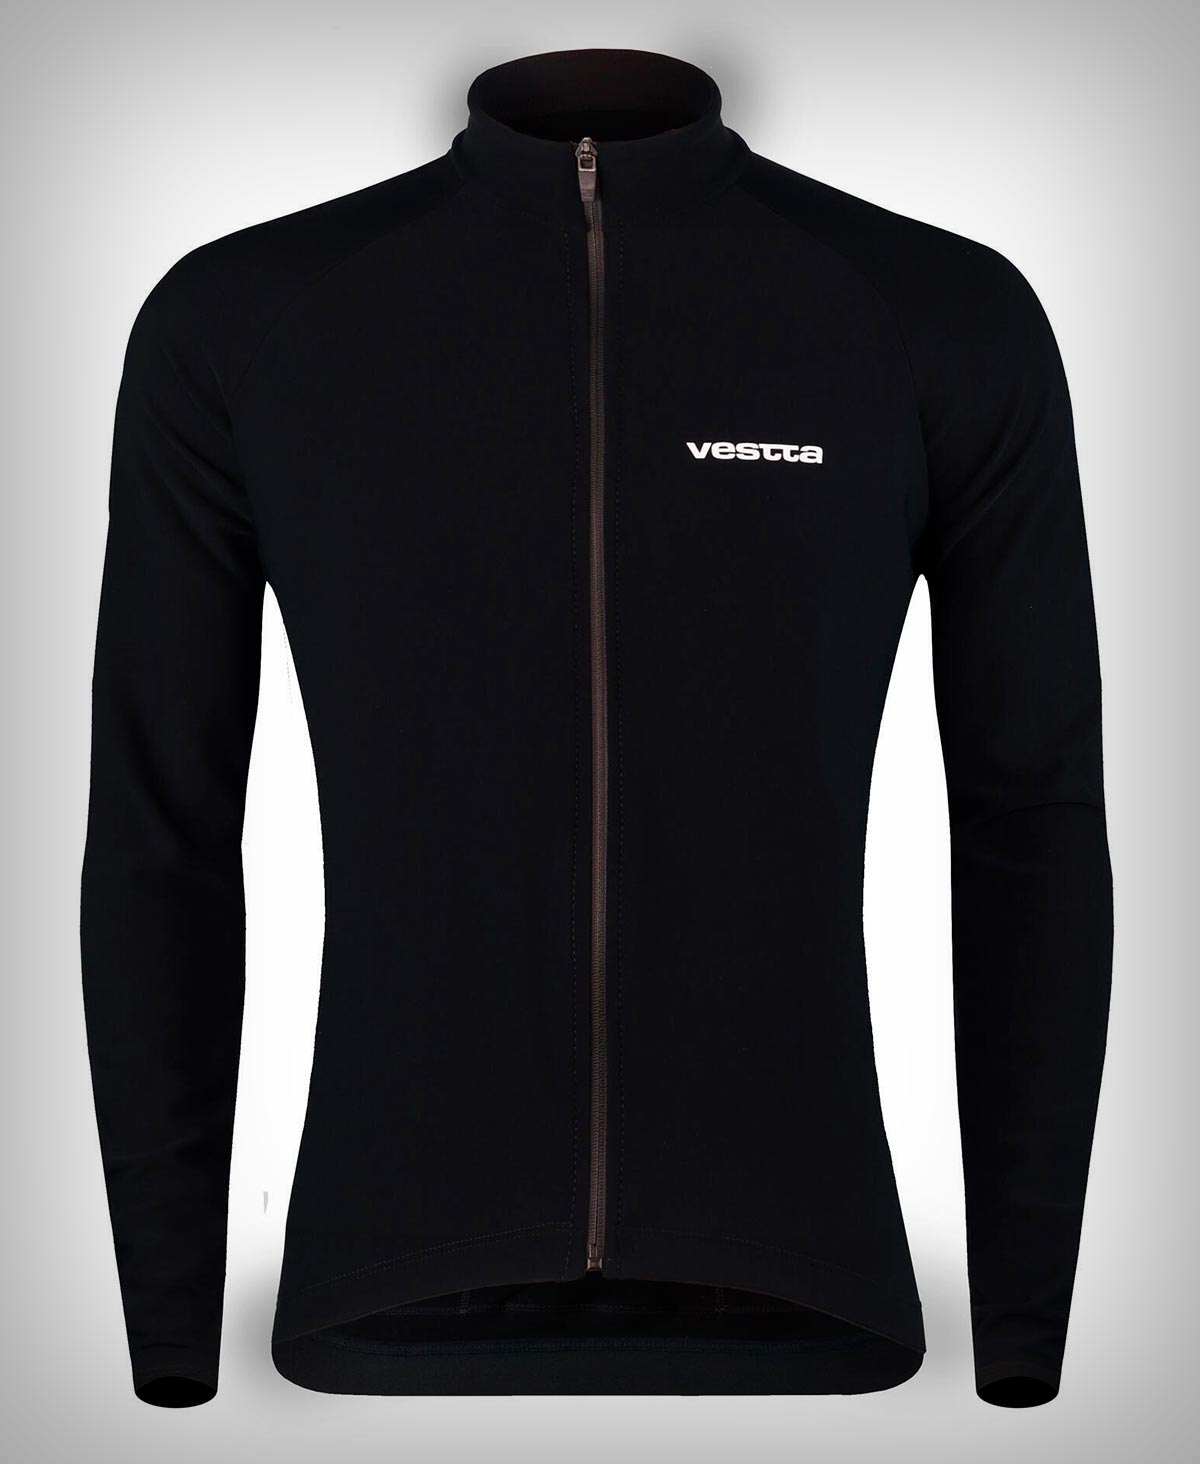 Decathlon presenta la Vestta Rain, una chaqueta de ciclismo con tejido repelente al agua